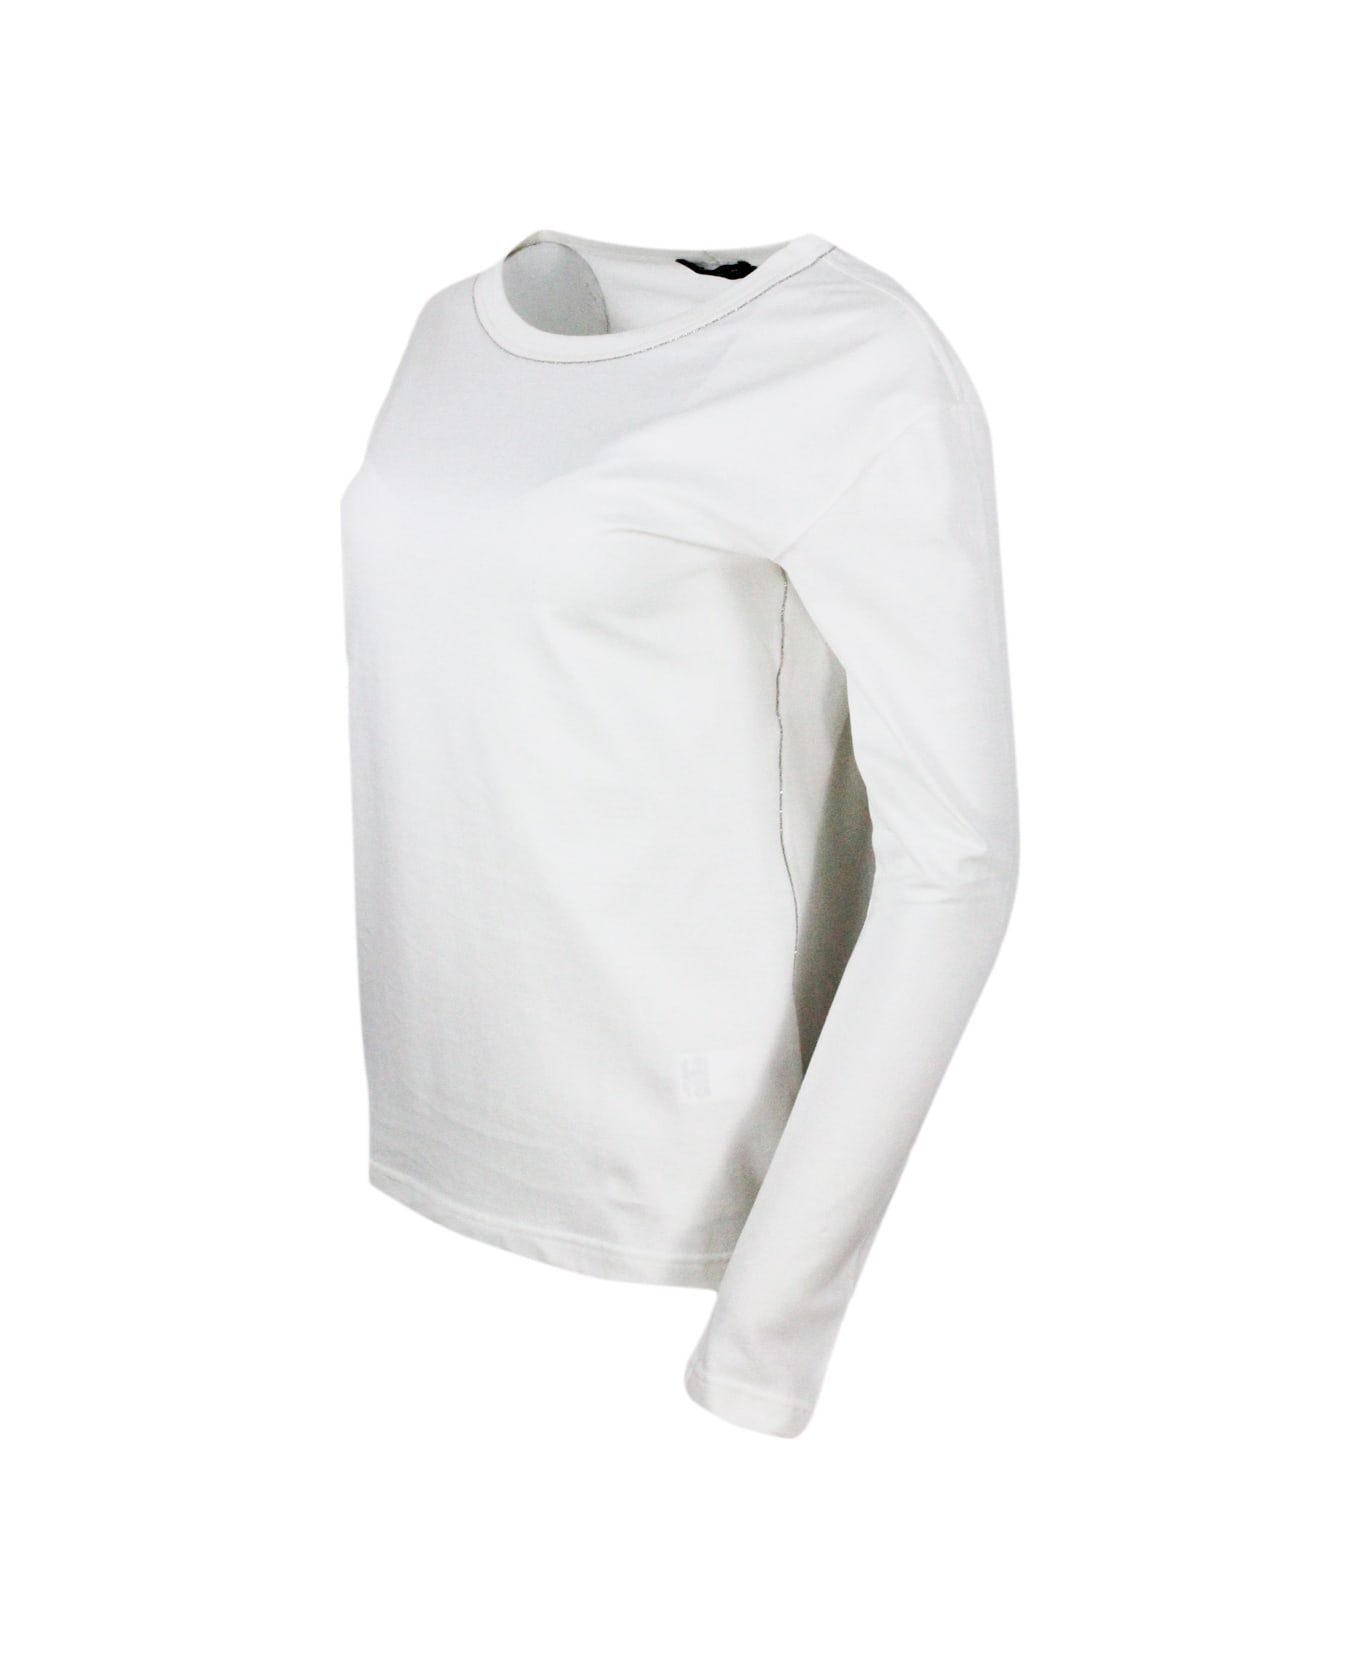 Fabiana Filippi Crew-neck Long-sleeved Cotton Jersey T-shirt Embellished With Rows Of Monili On The Neck - White